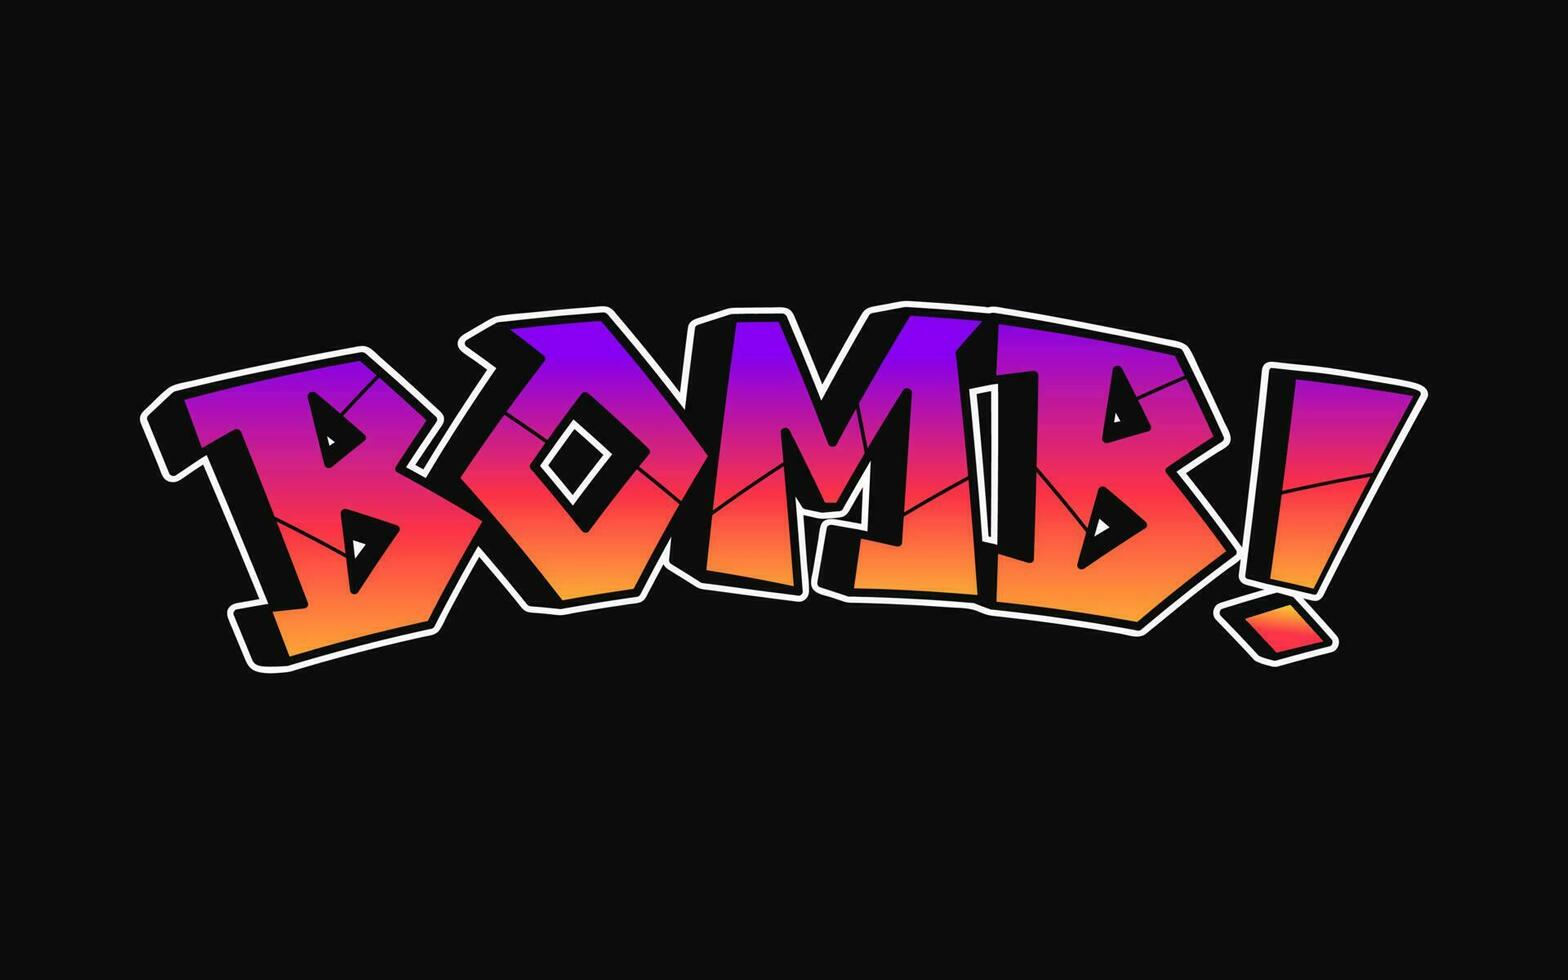 Bombe - - Single Wort, Briefe Graffiti Stil. Vektor Hand gezeichnet Logo. komisch cool trippy Wort Bombe, Mode, Graffiti Stil drucken T-Shirt, Poster Konzept